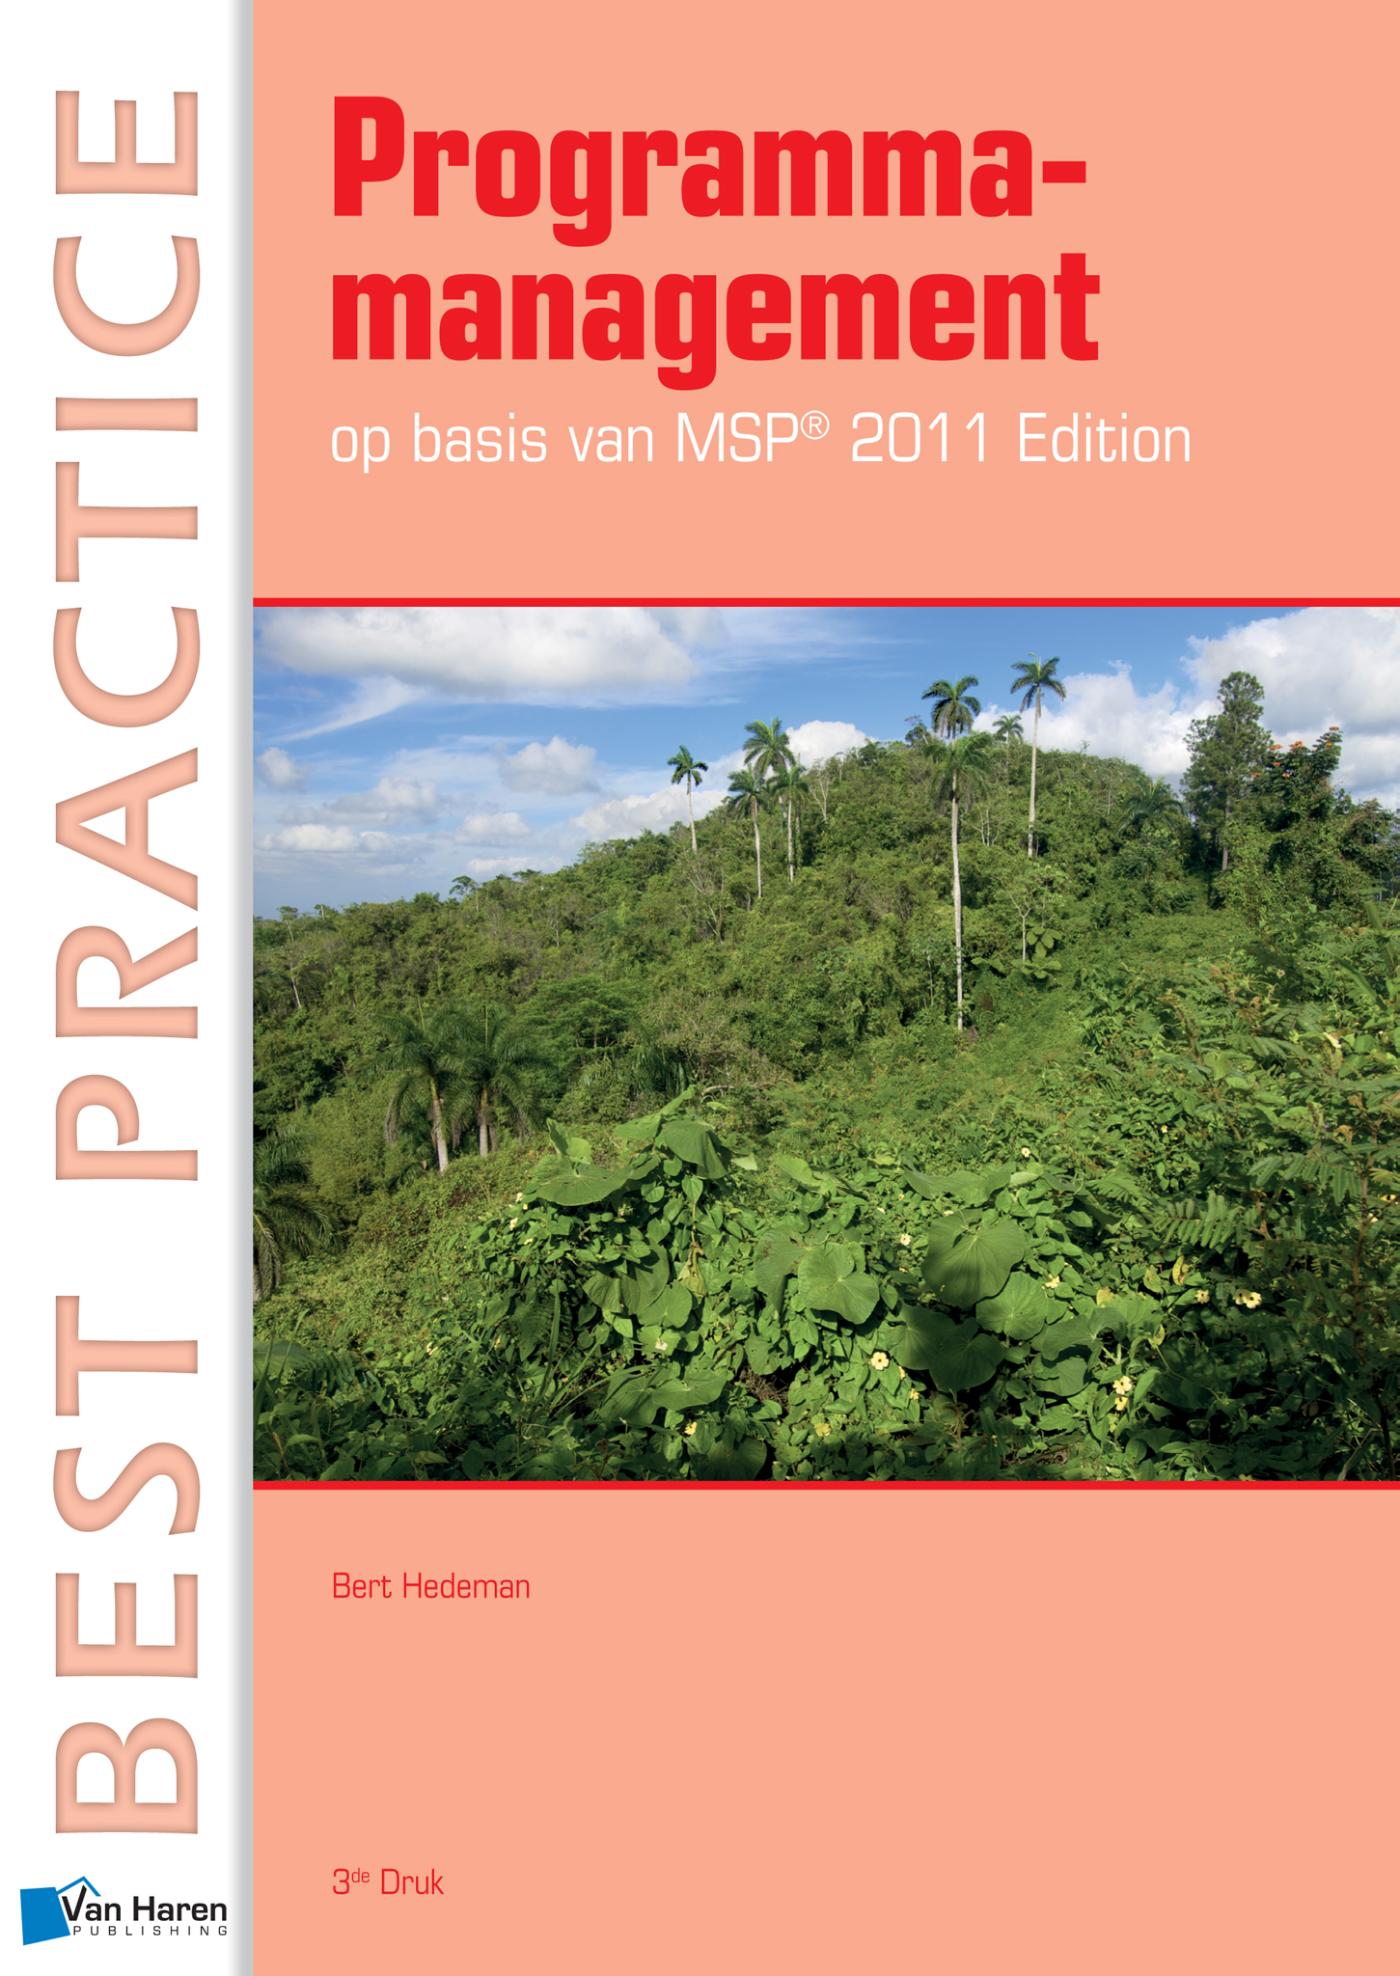 Programmamanagement op basis van MSP 2011 edition (Ebook)